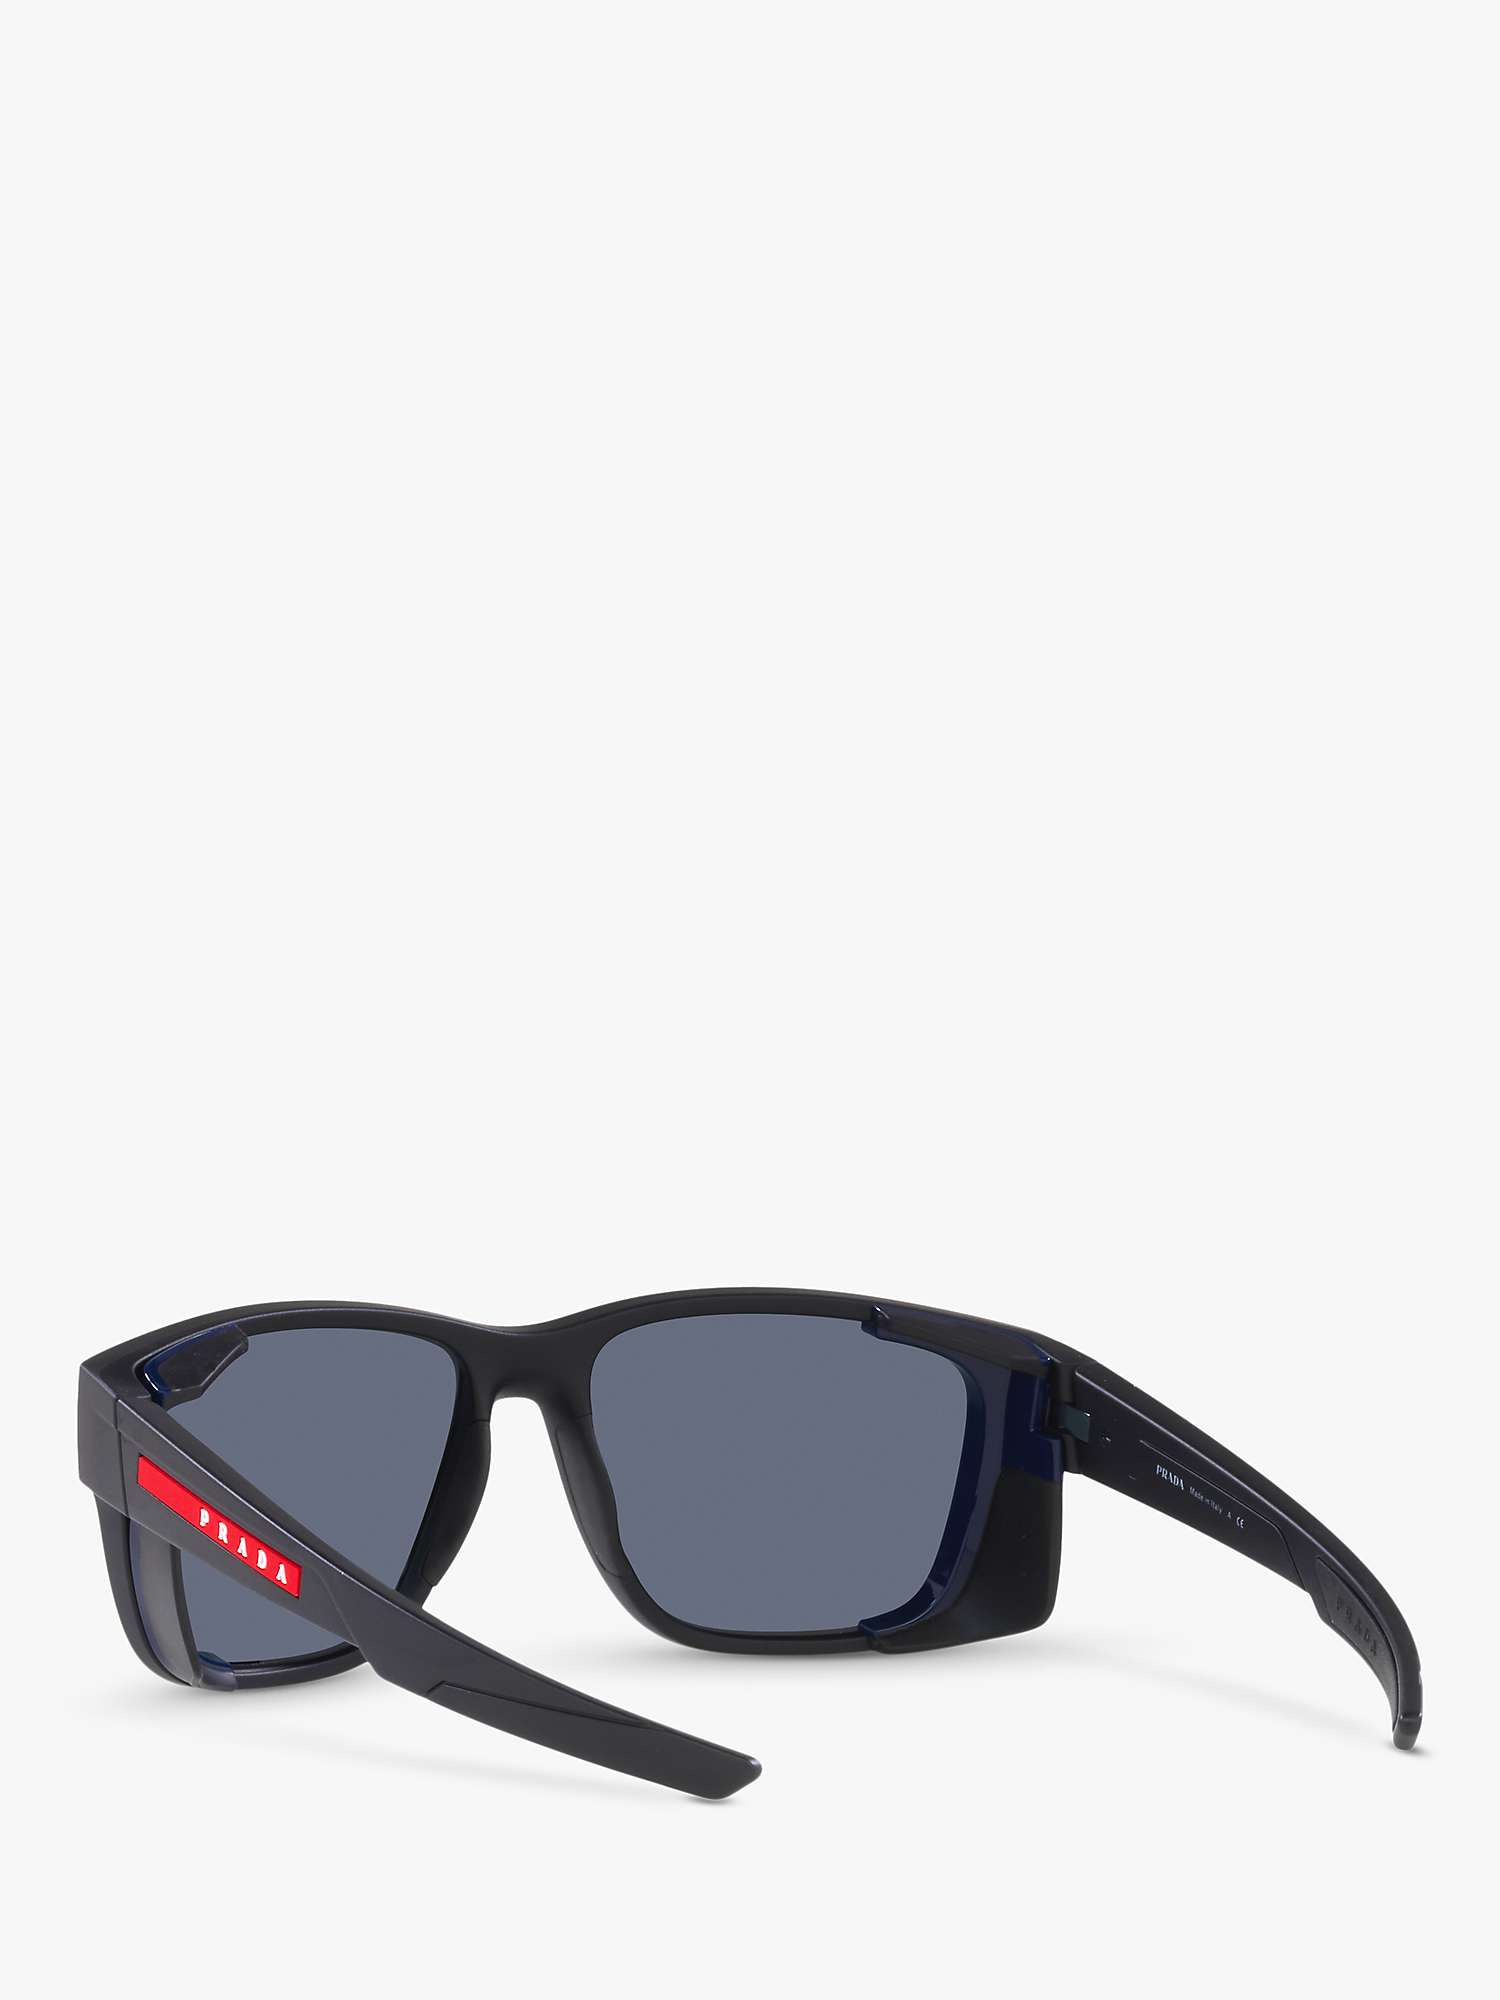 Buy Prada Linea Rossa PS07WS Men's Pillow Sunglasses, Black Online at johnlewis.com